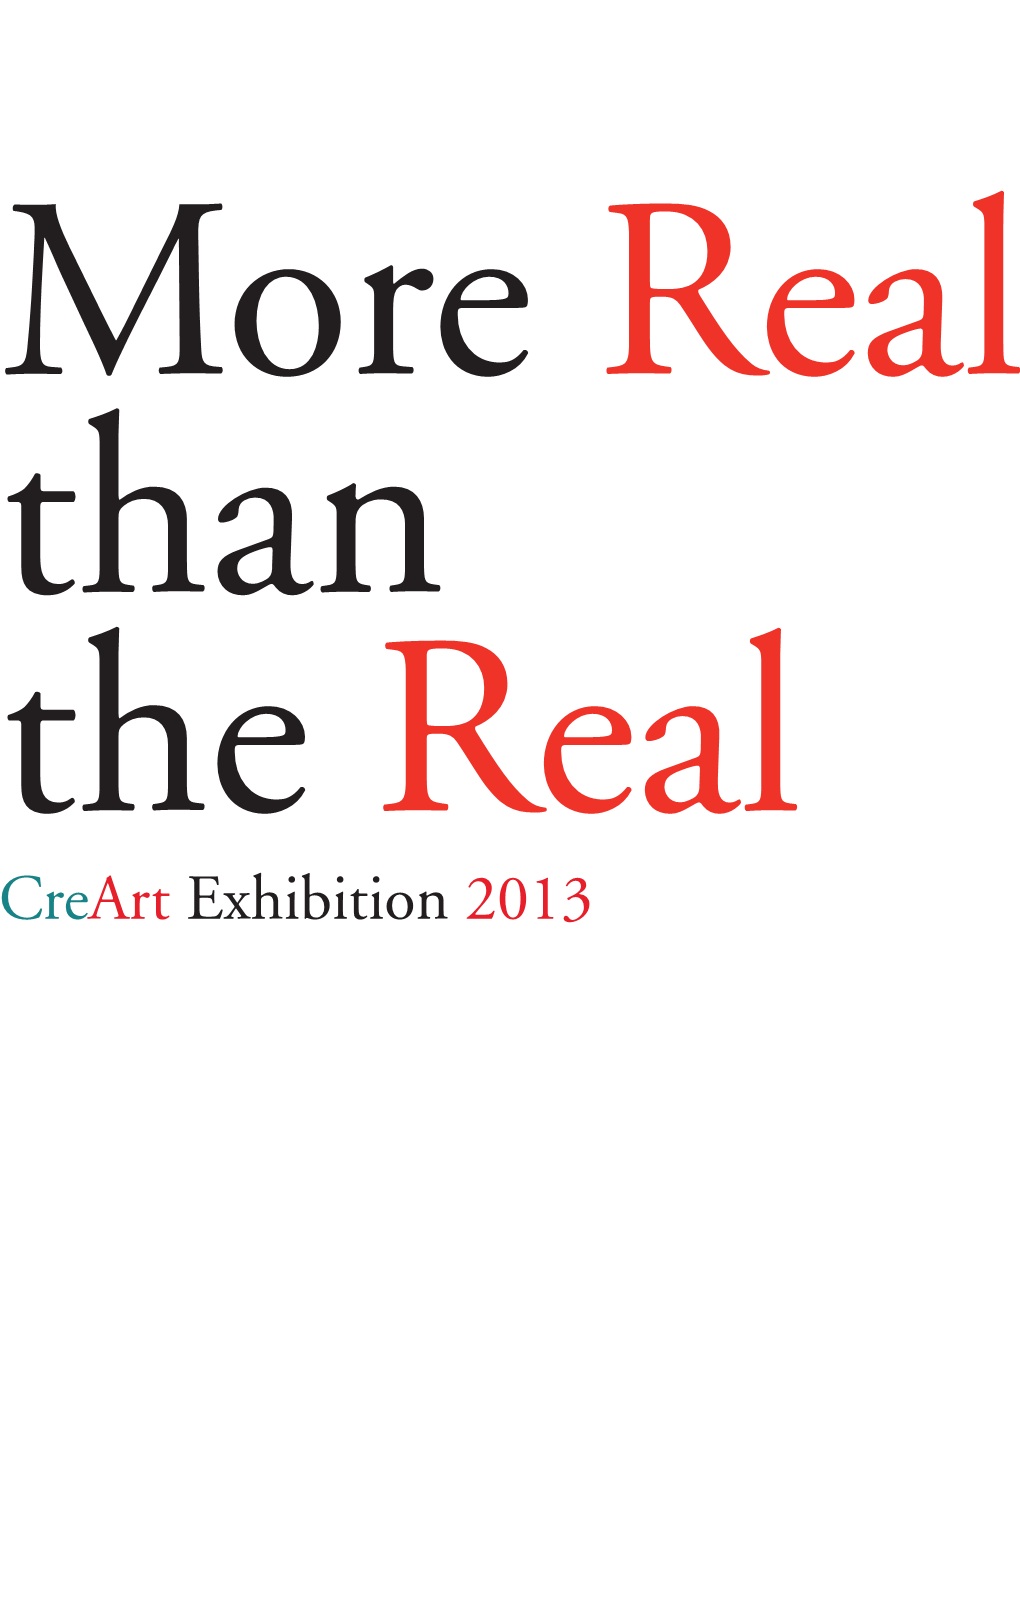 Creart Exhibition 2013